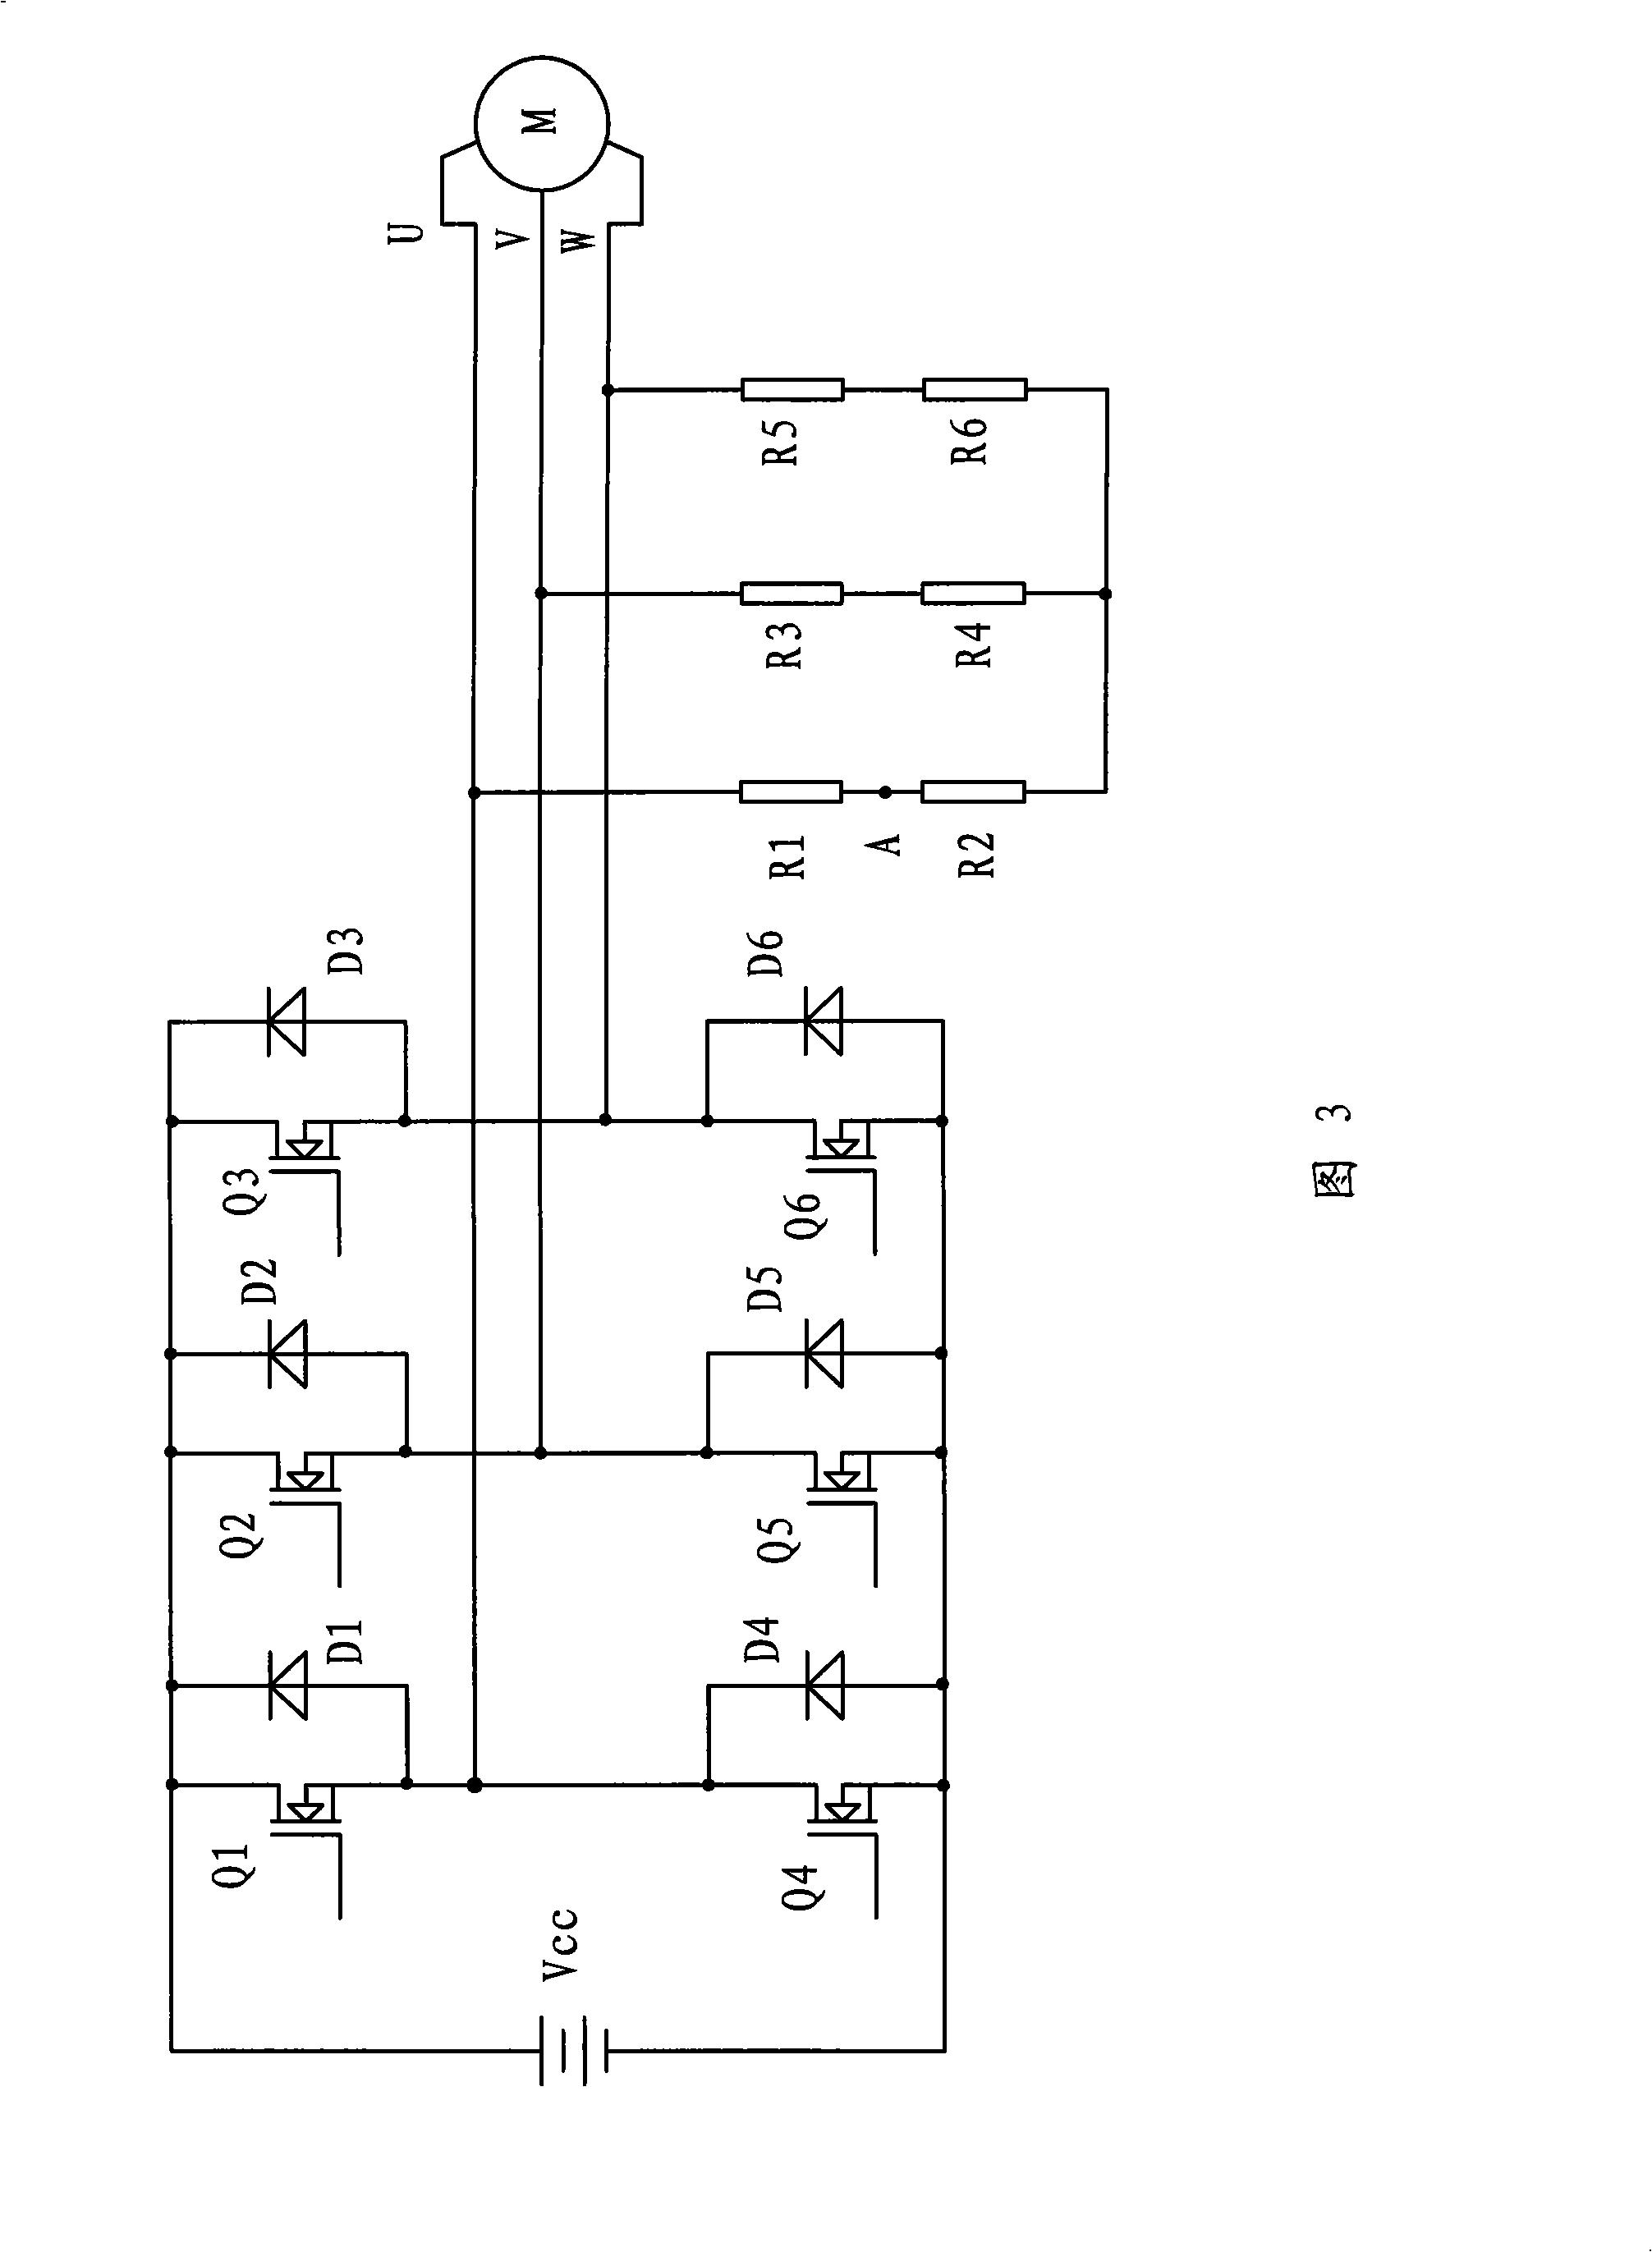 Control method for brushless DC motor